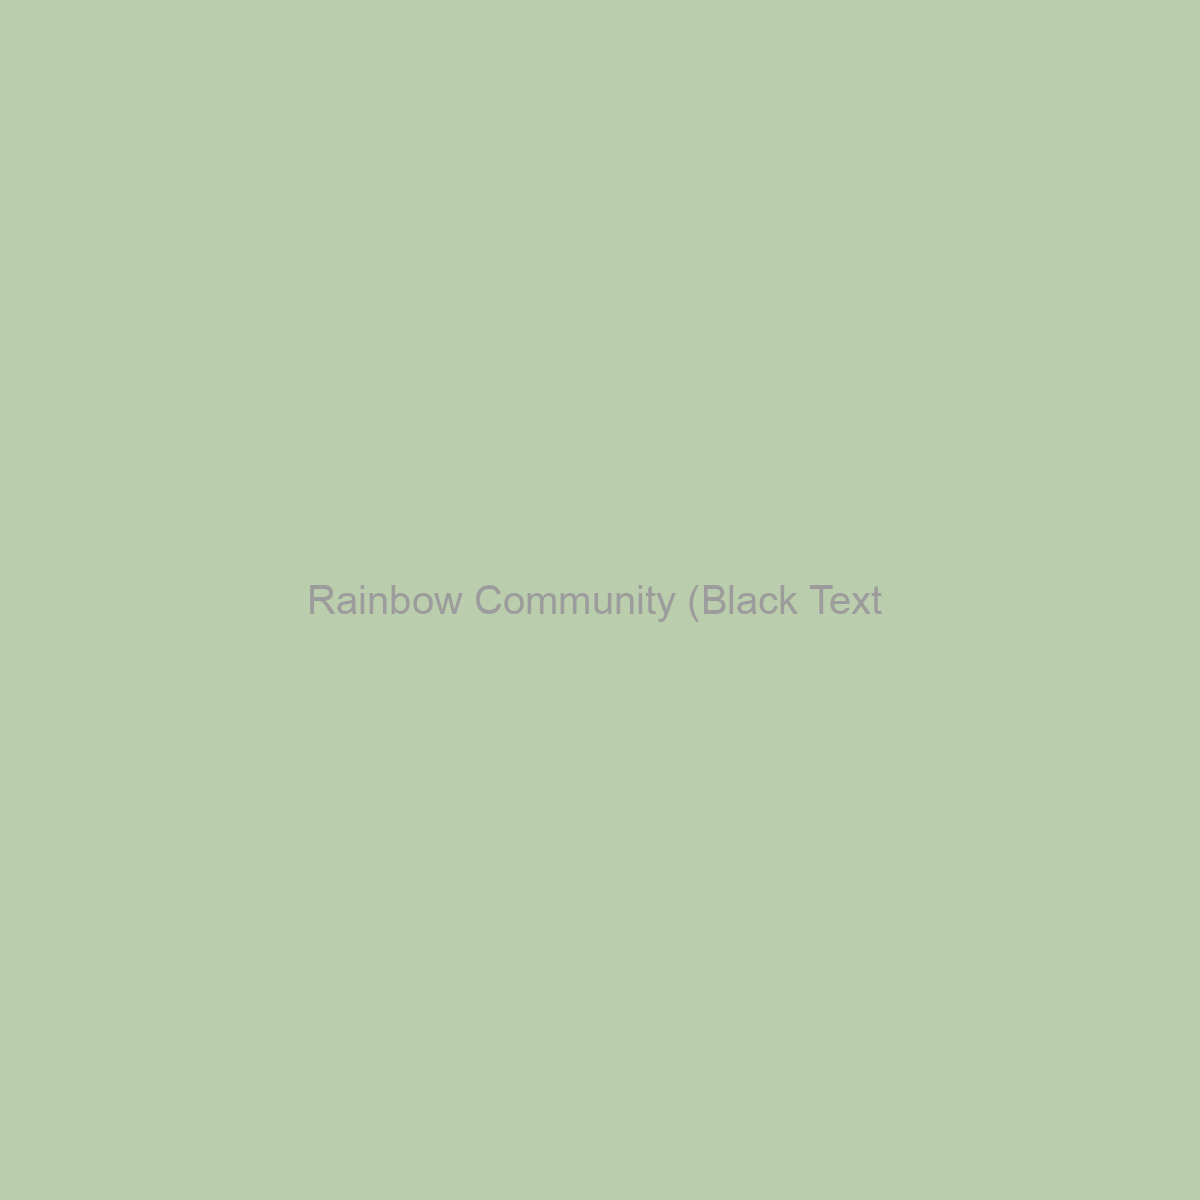 Rainbow Community (Black Text / Light Background) Placeholder Image